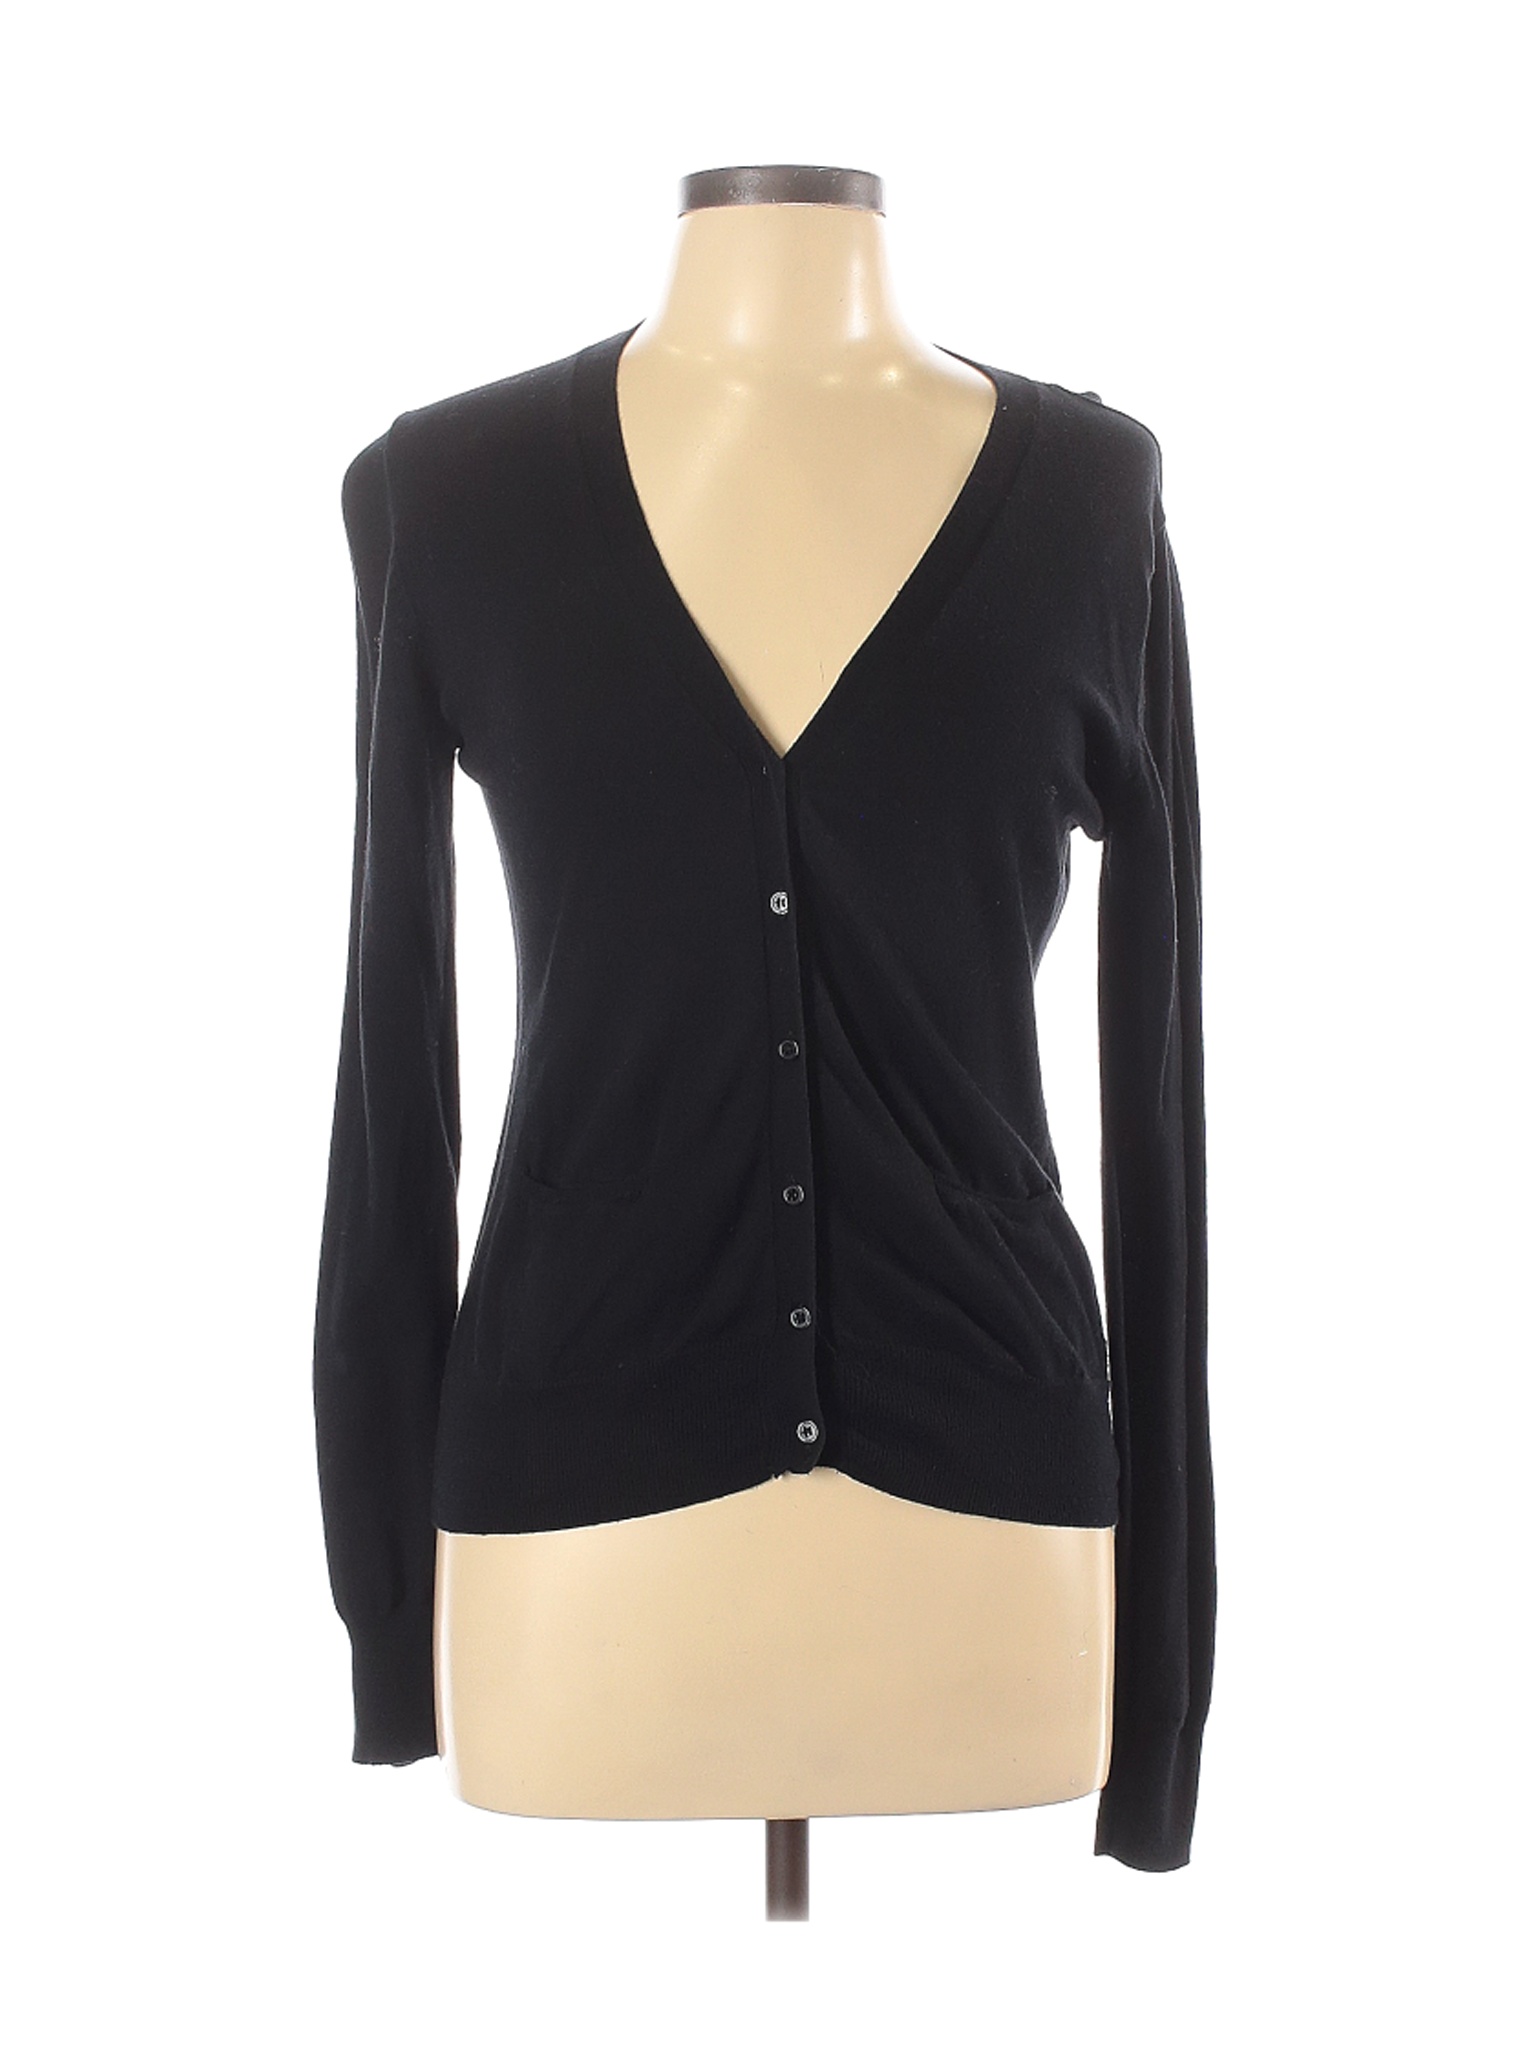 Zara Women Black Cardigan L | eBay